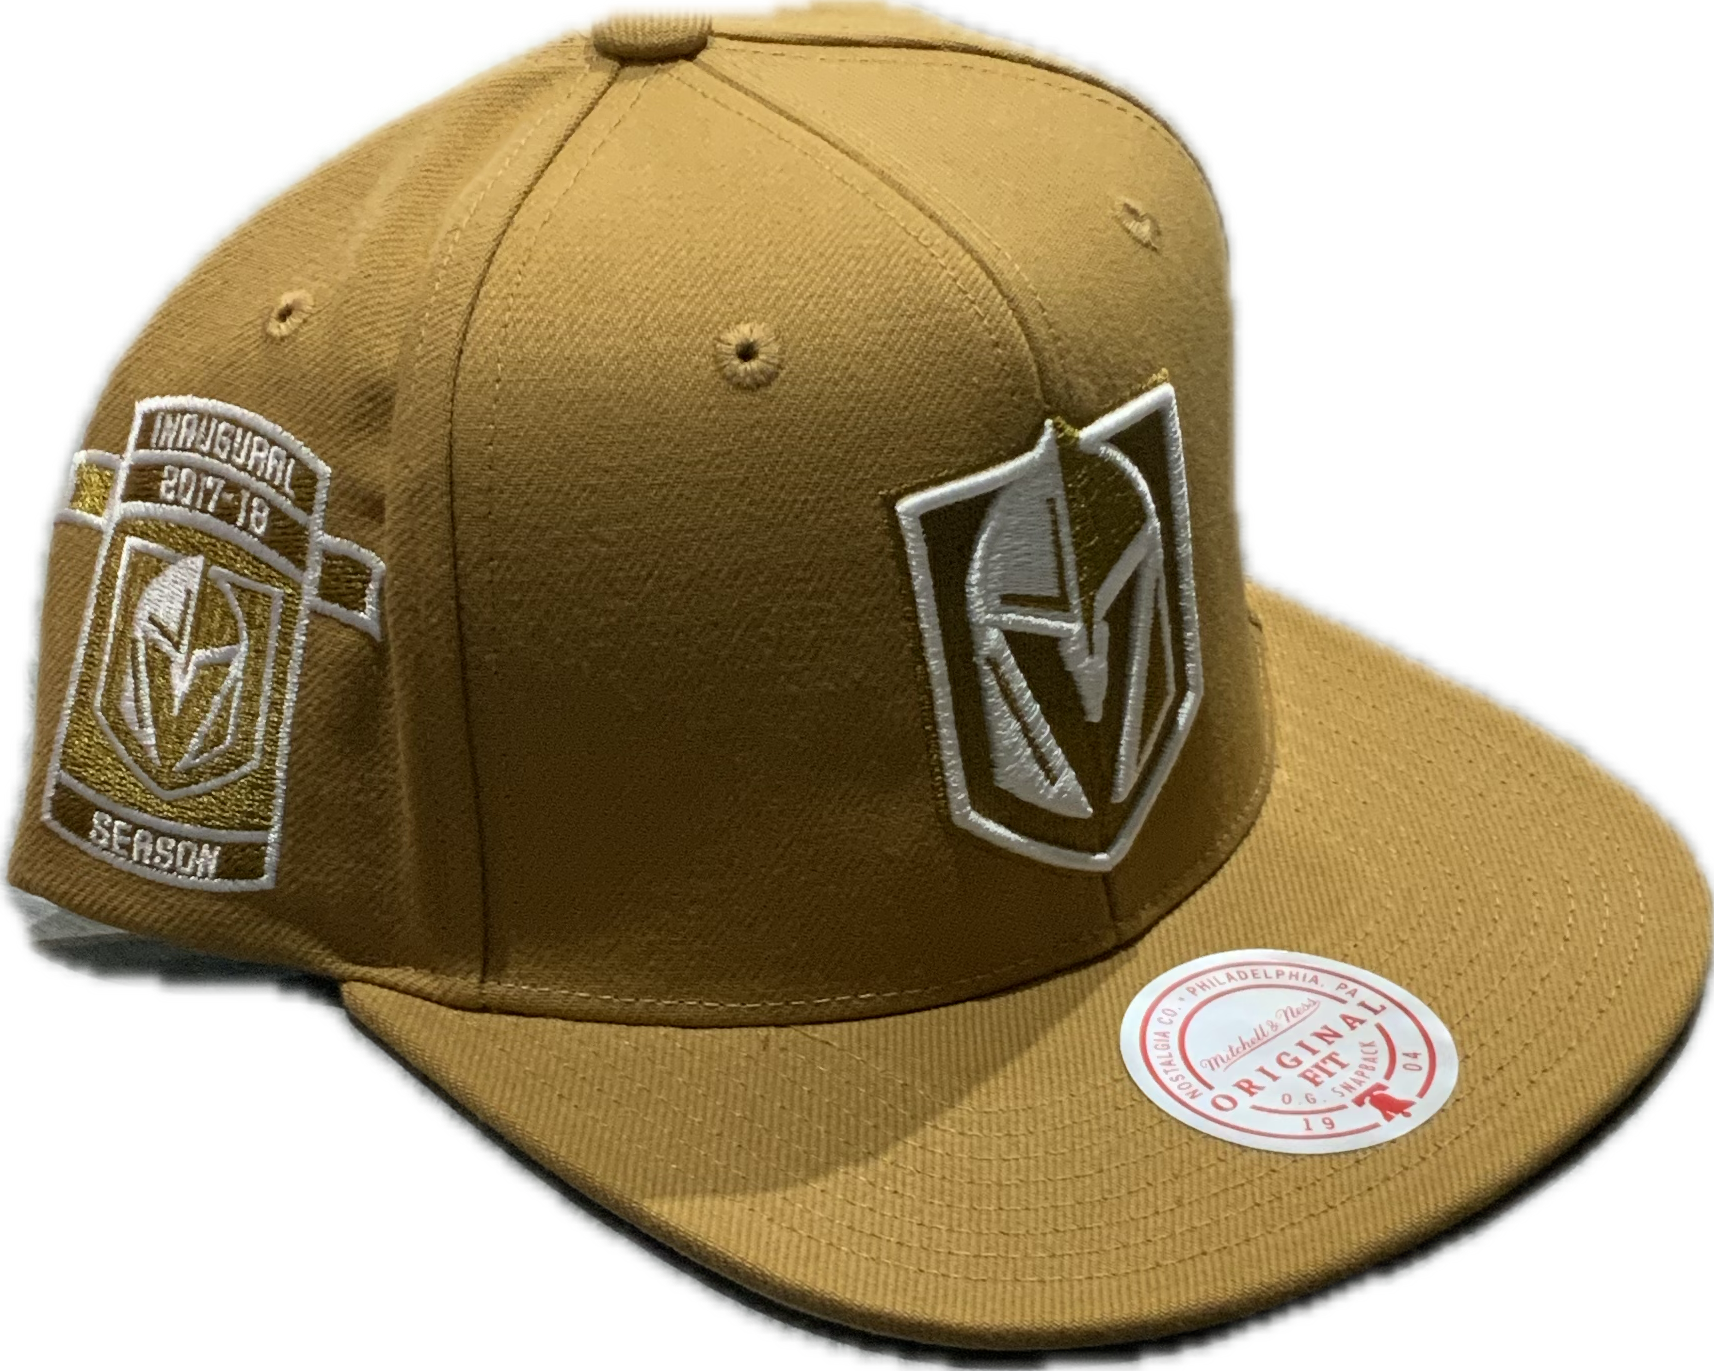 Vegas Golden Knights Tan Back to Basics Snapback Hat